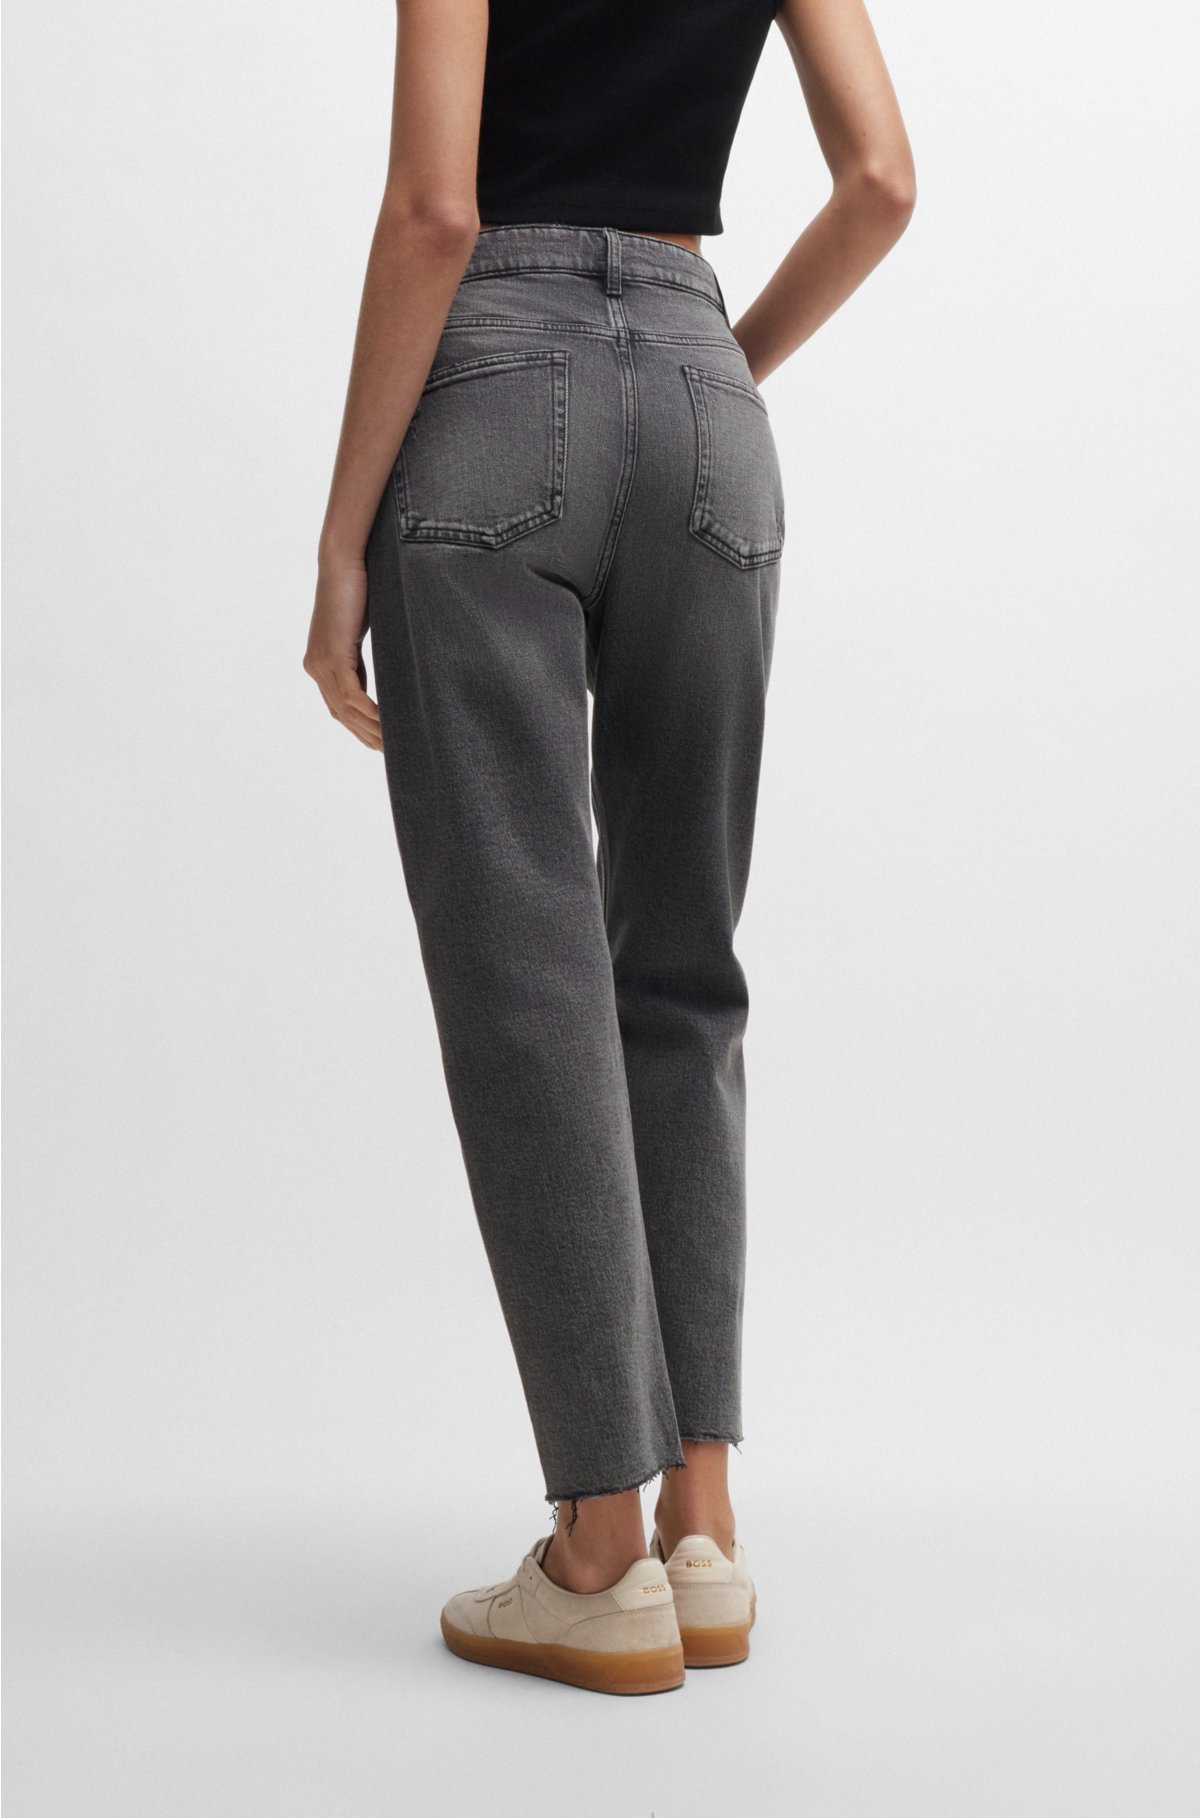 Casual-fit jeans in grey stretch denim with raw hems, Dark Grey